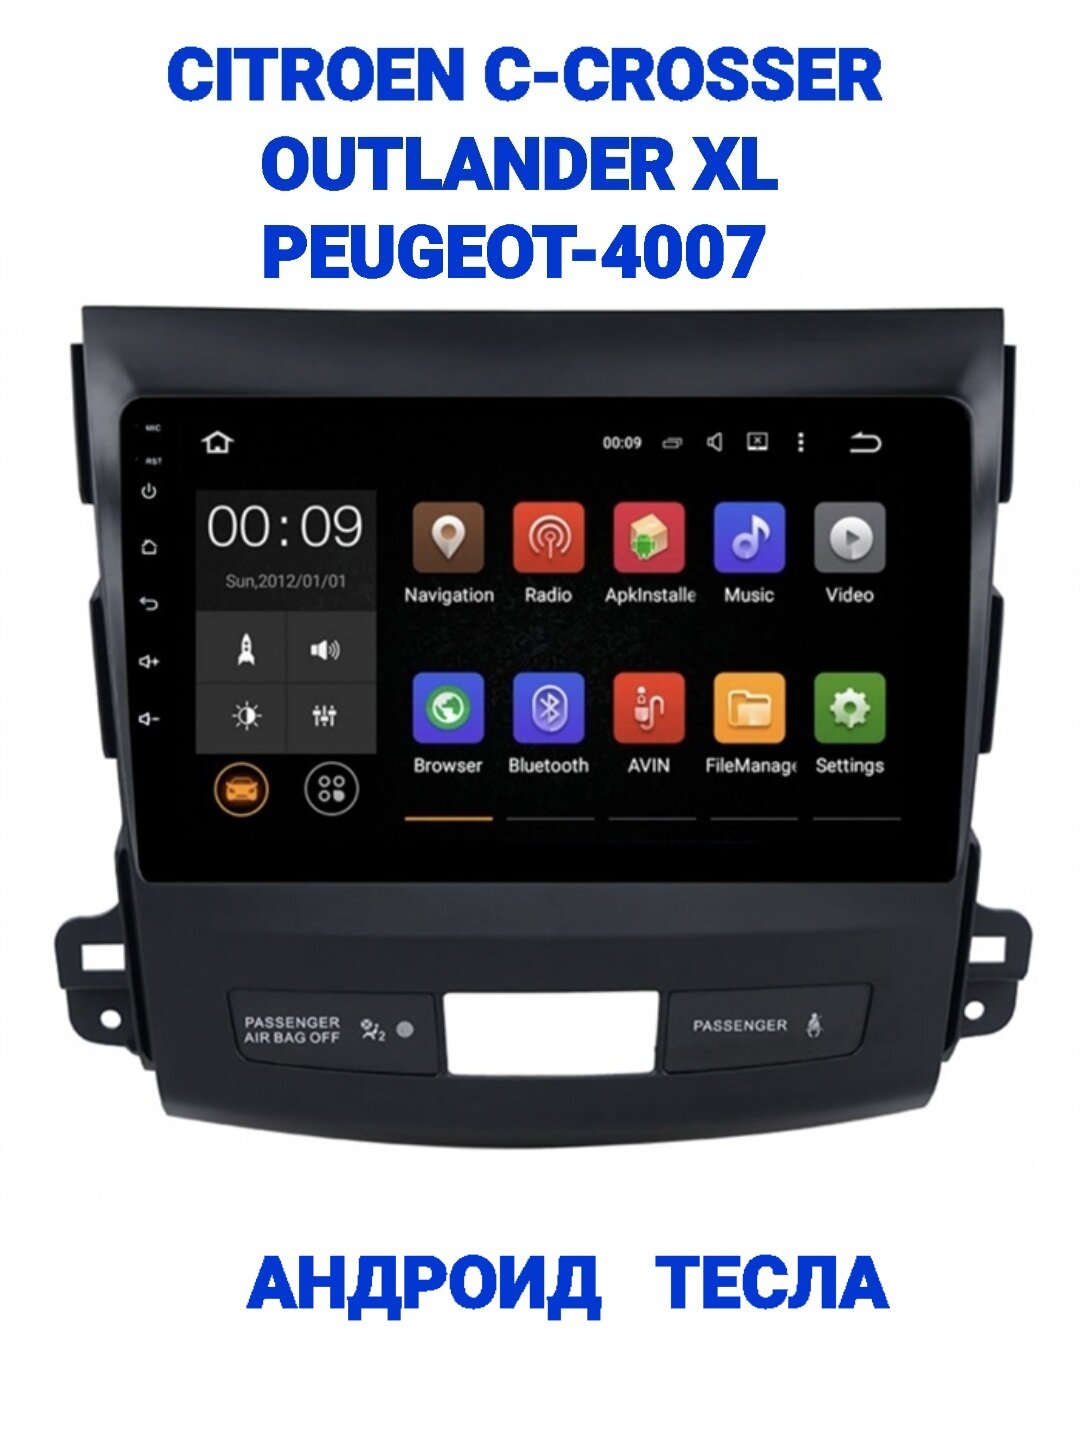 Магнитола андроид 13, WiFi, GPS, USB, Блютуз, экран 9" для Мицубиси Аутлендер-2; Пежо-4007 (Mitsubishi Outlander XL, Peugeot 4007) 2006-2012г